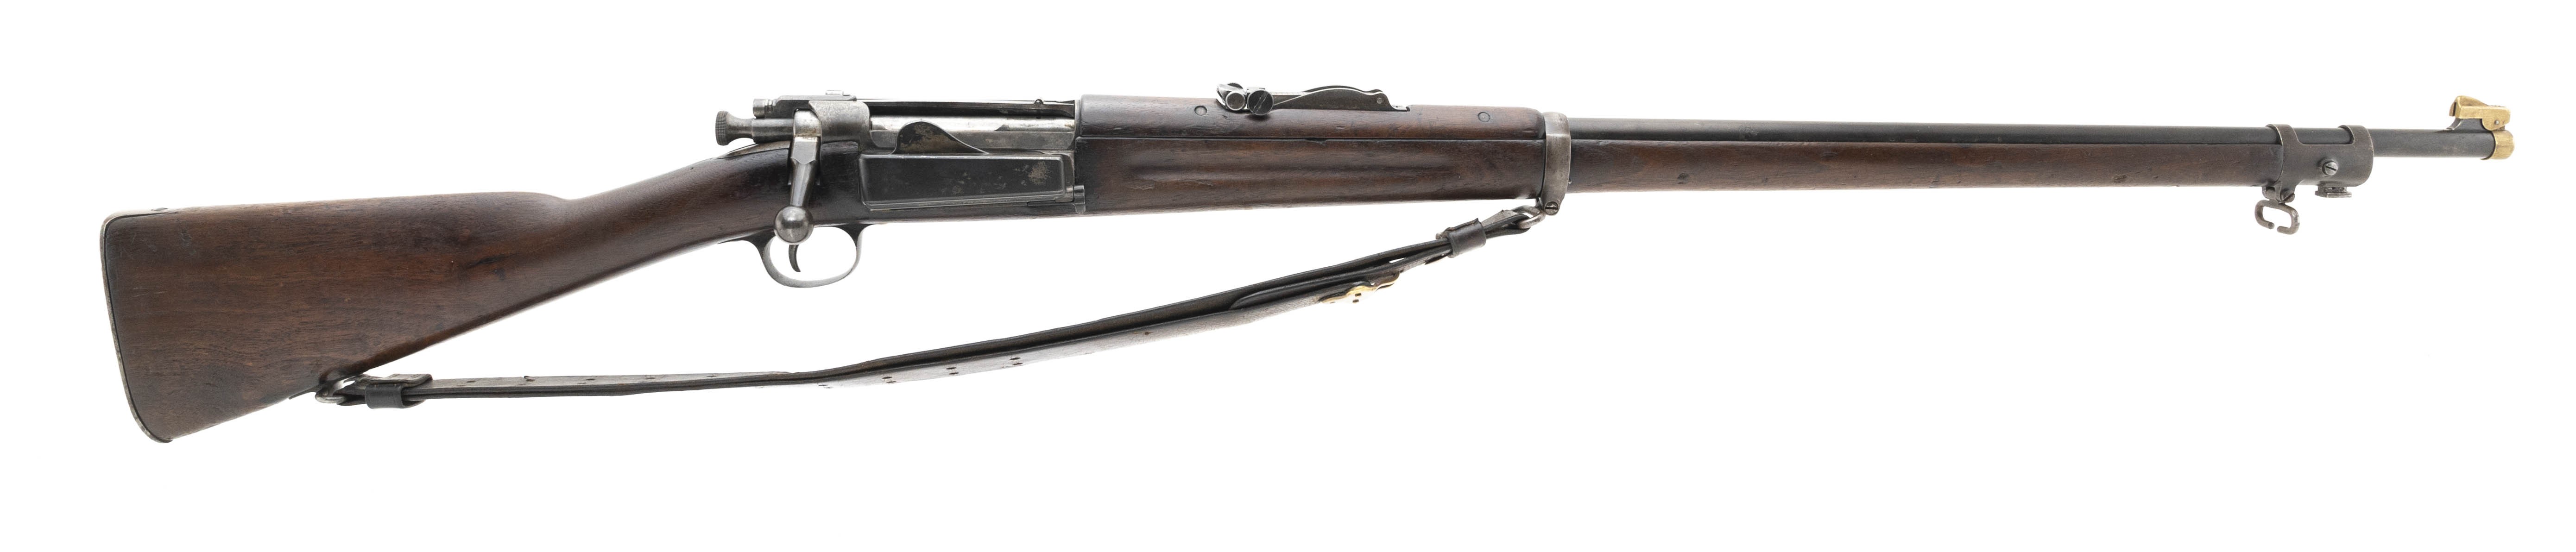 springfield 1898 ammo